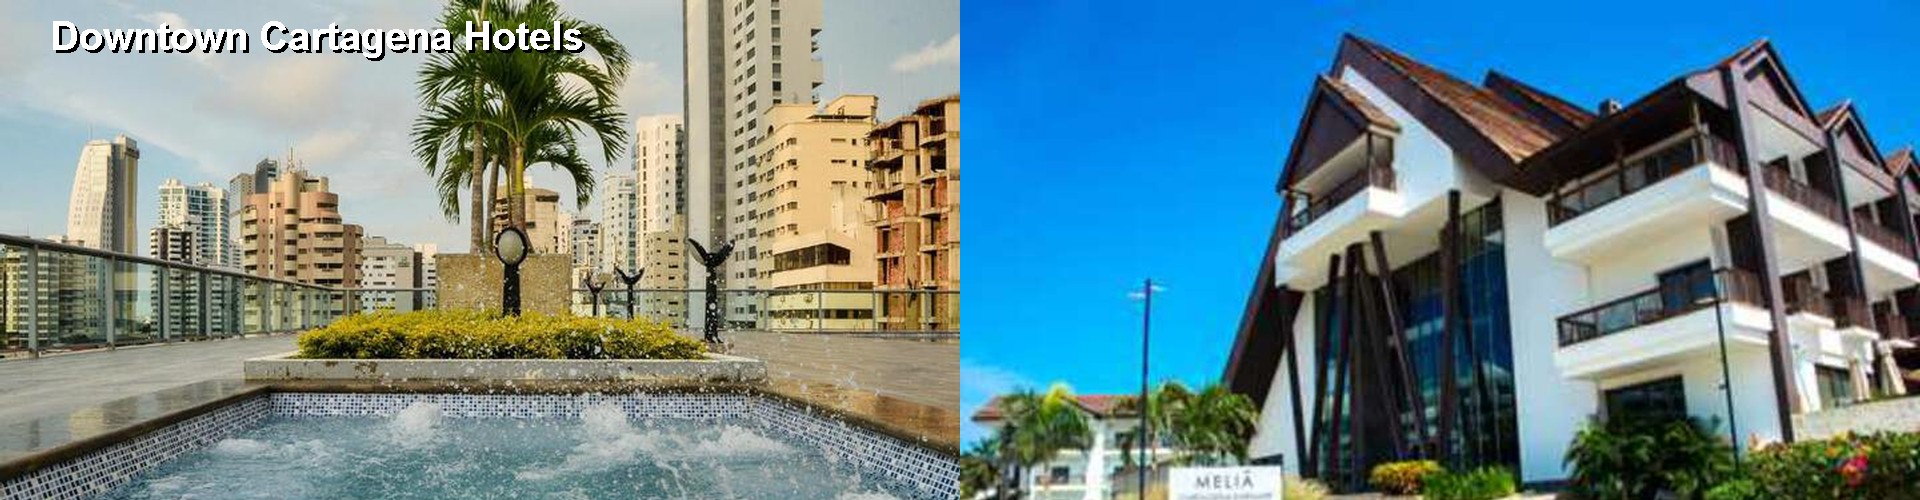 5 Best Hotels near Downtown Cartagena